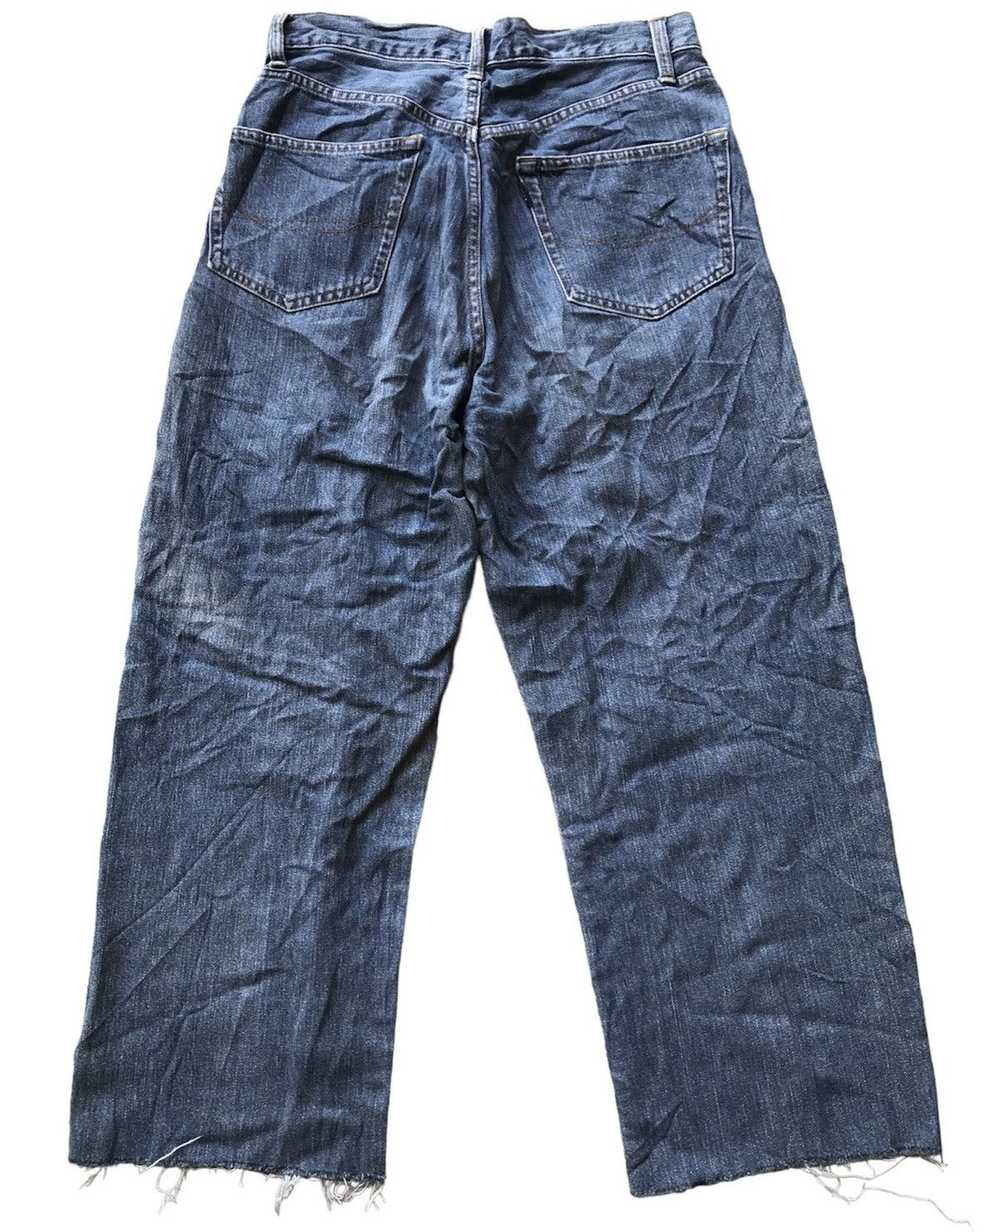 Yohji Yamamoto Ys Bis 3 Quarter Cropped Jeans - image 2